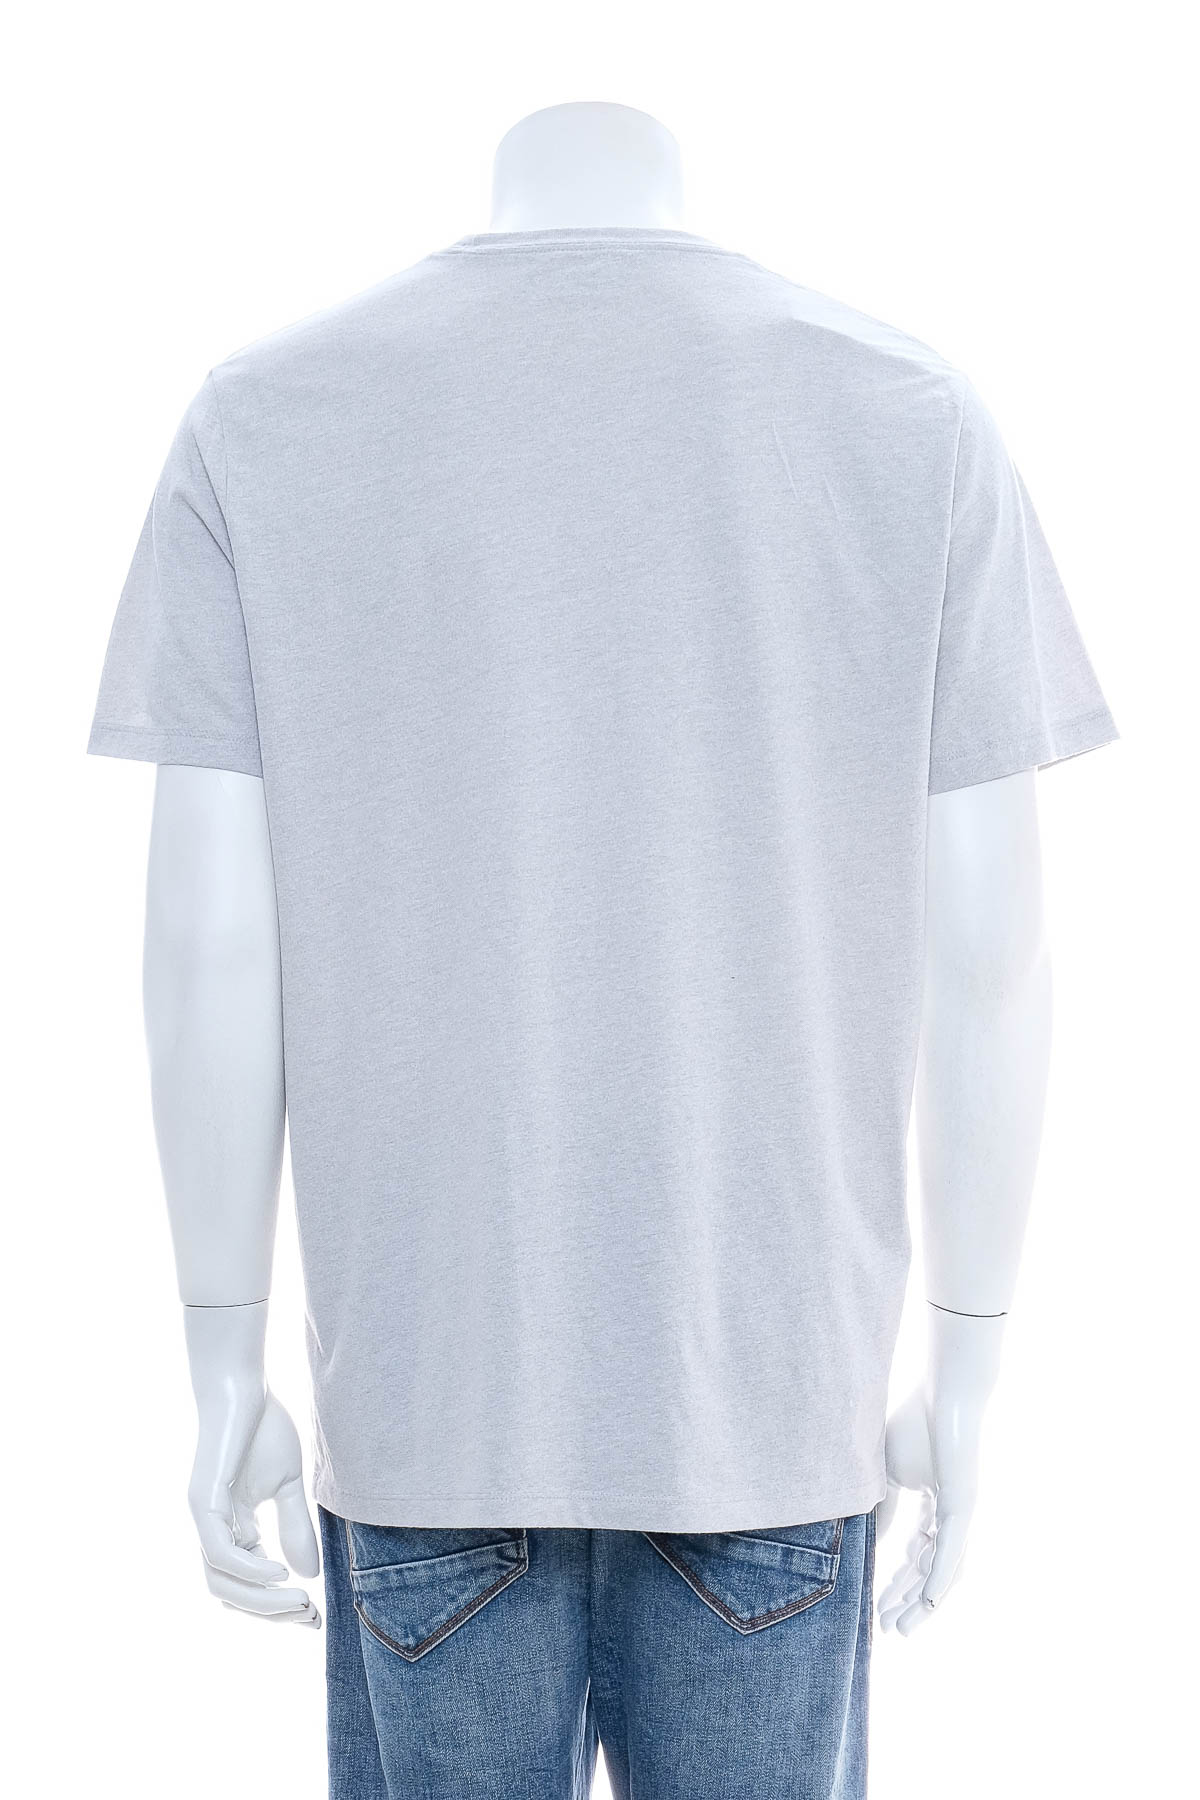 Men's T-shirt - Abercrombie & Fitch - 1